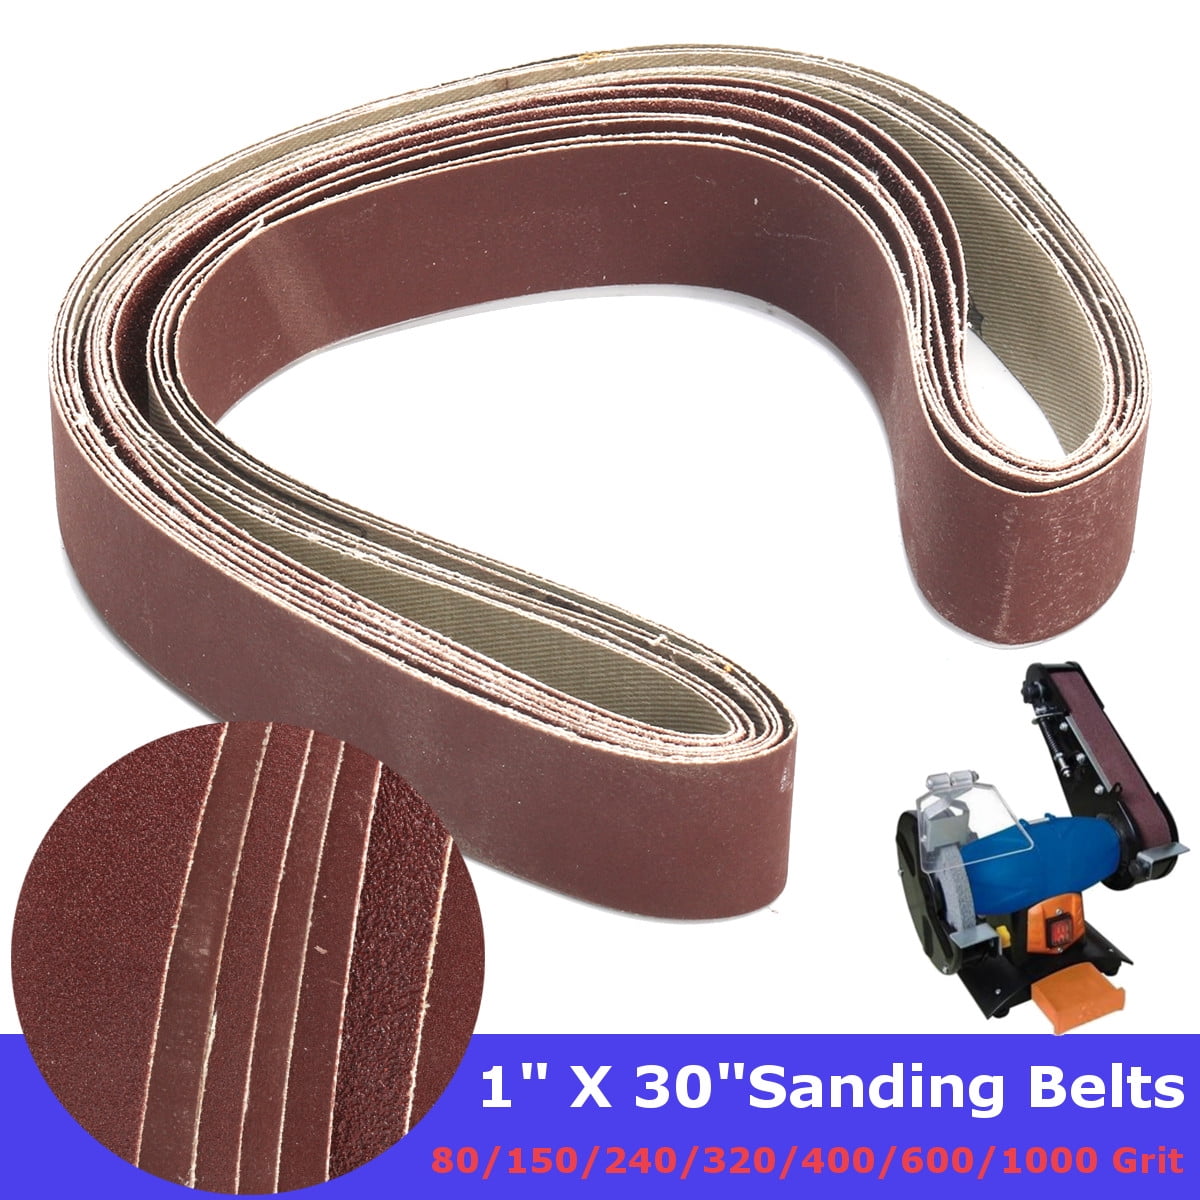 15pc Sanding Belts 600-1000Grit Aluminum Oxide 1"x 30"Belt Sander Sanding Belt 